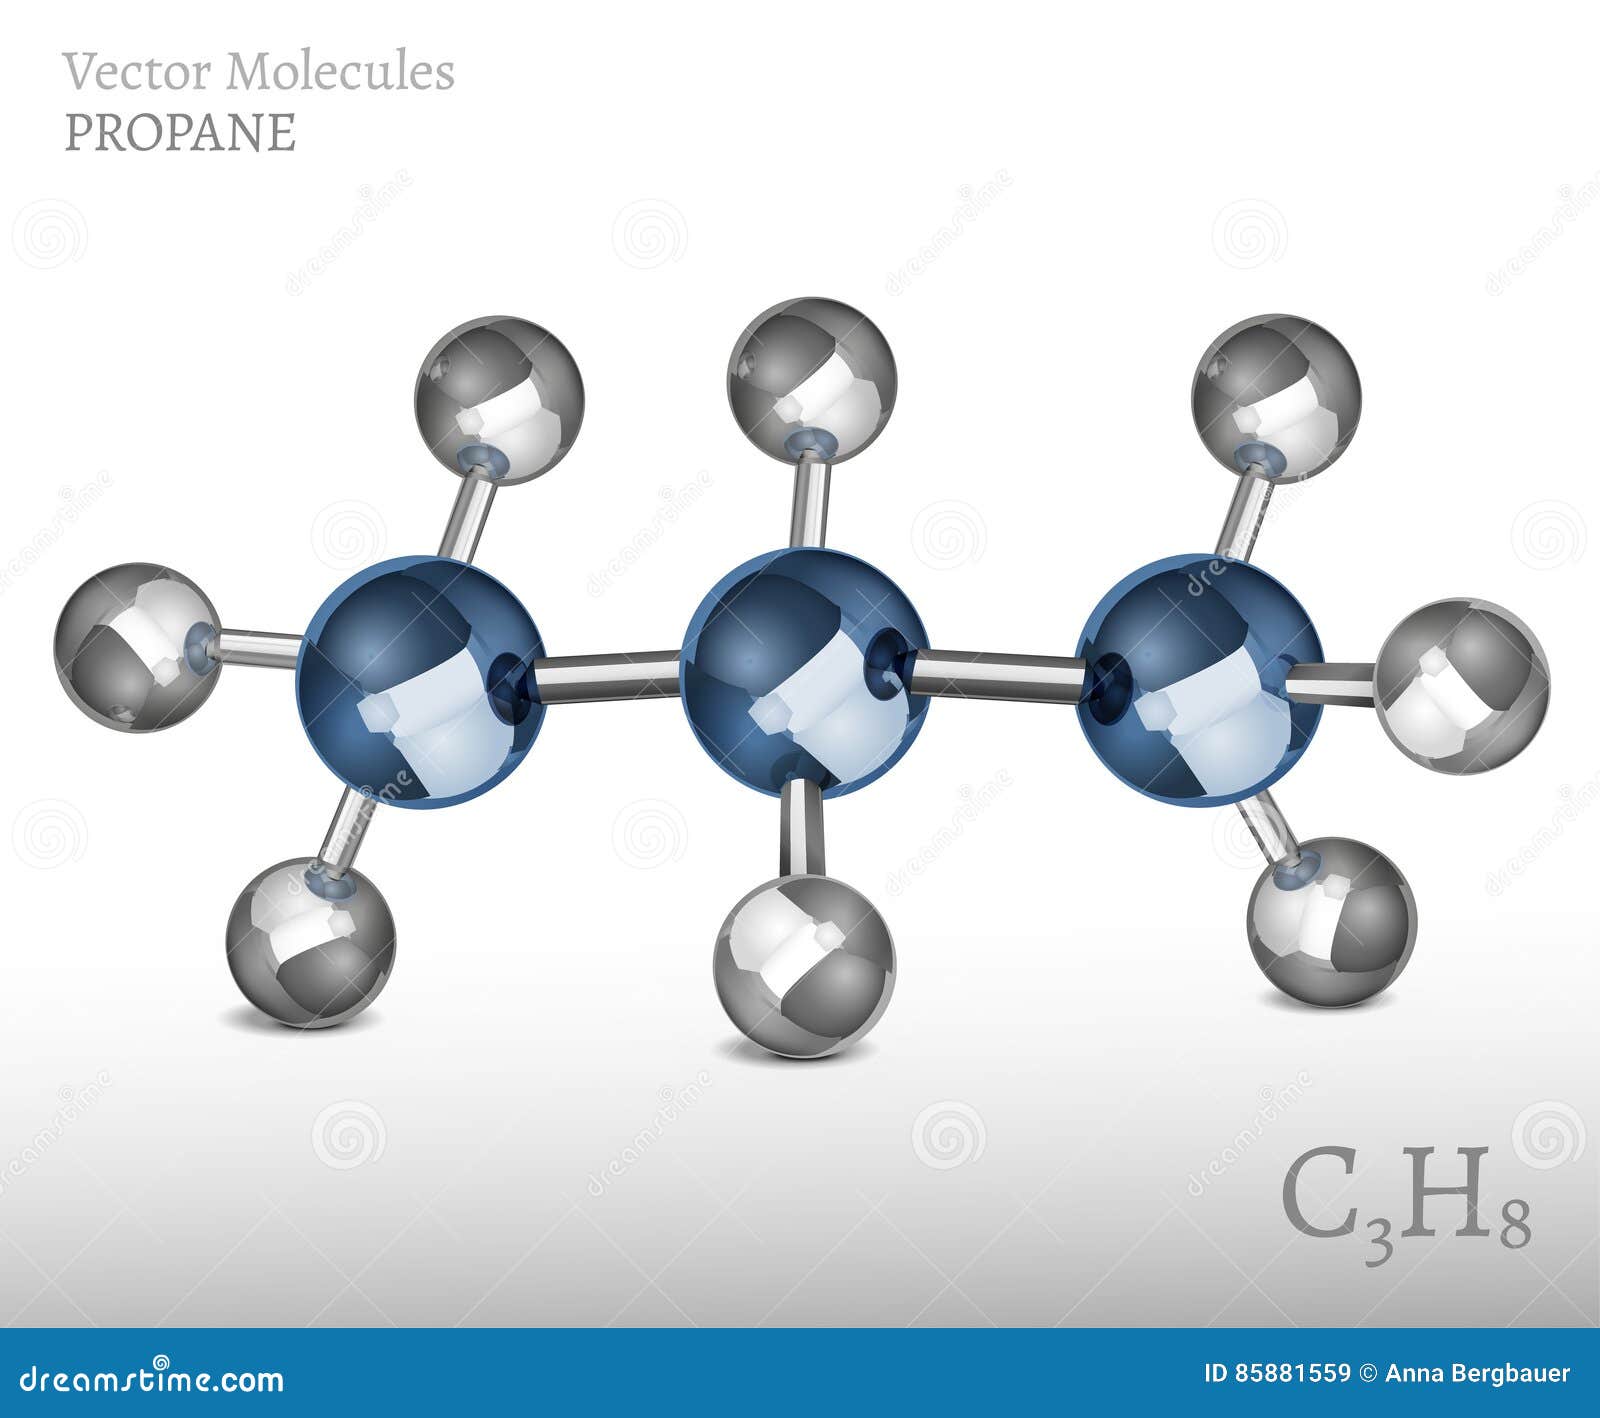 Propane, C3H8, Molecule Model And Chemical Formula Vector Illustration ...